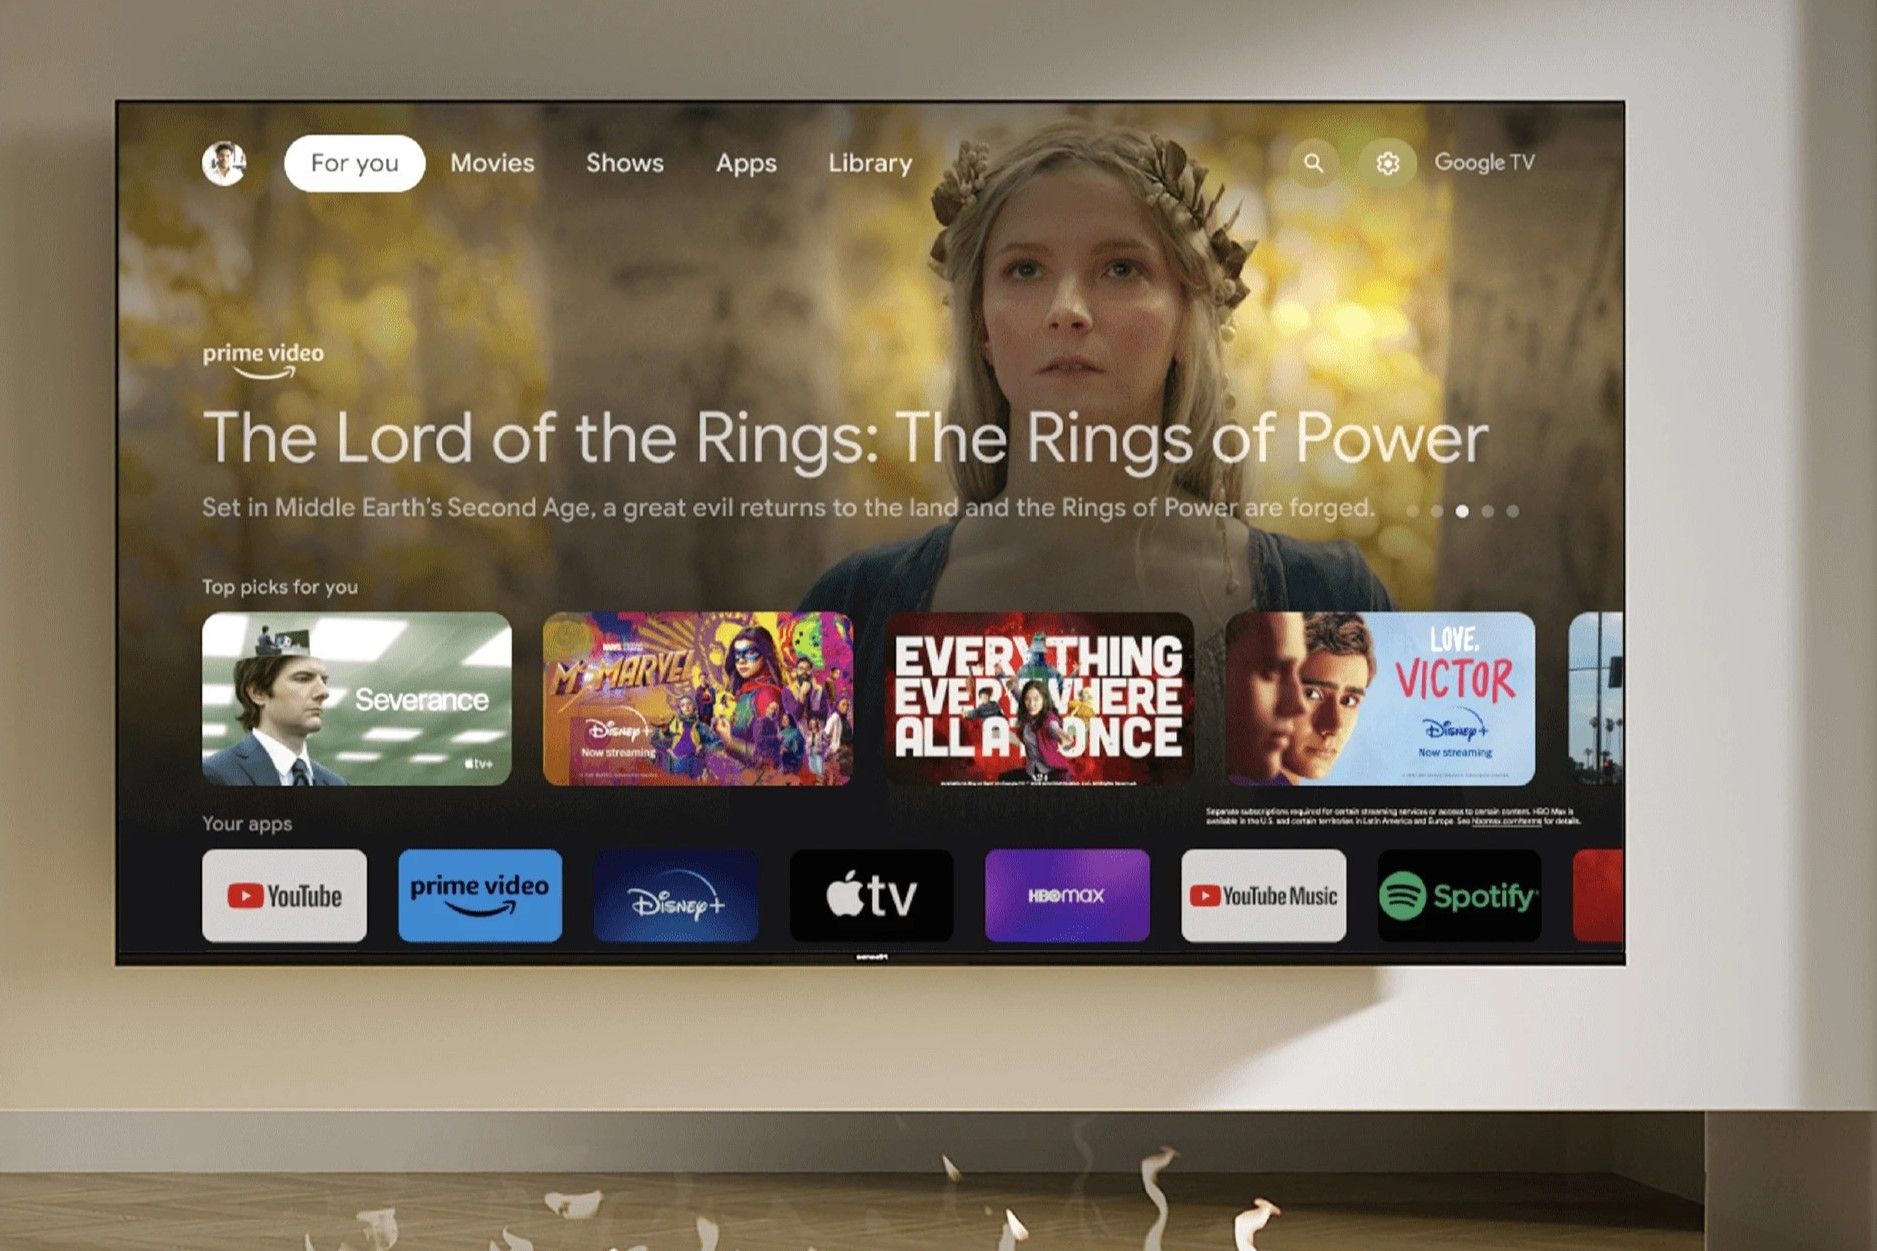 hisense u8k tv showing the Google TV platform on the screen